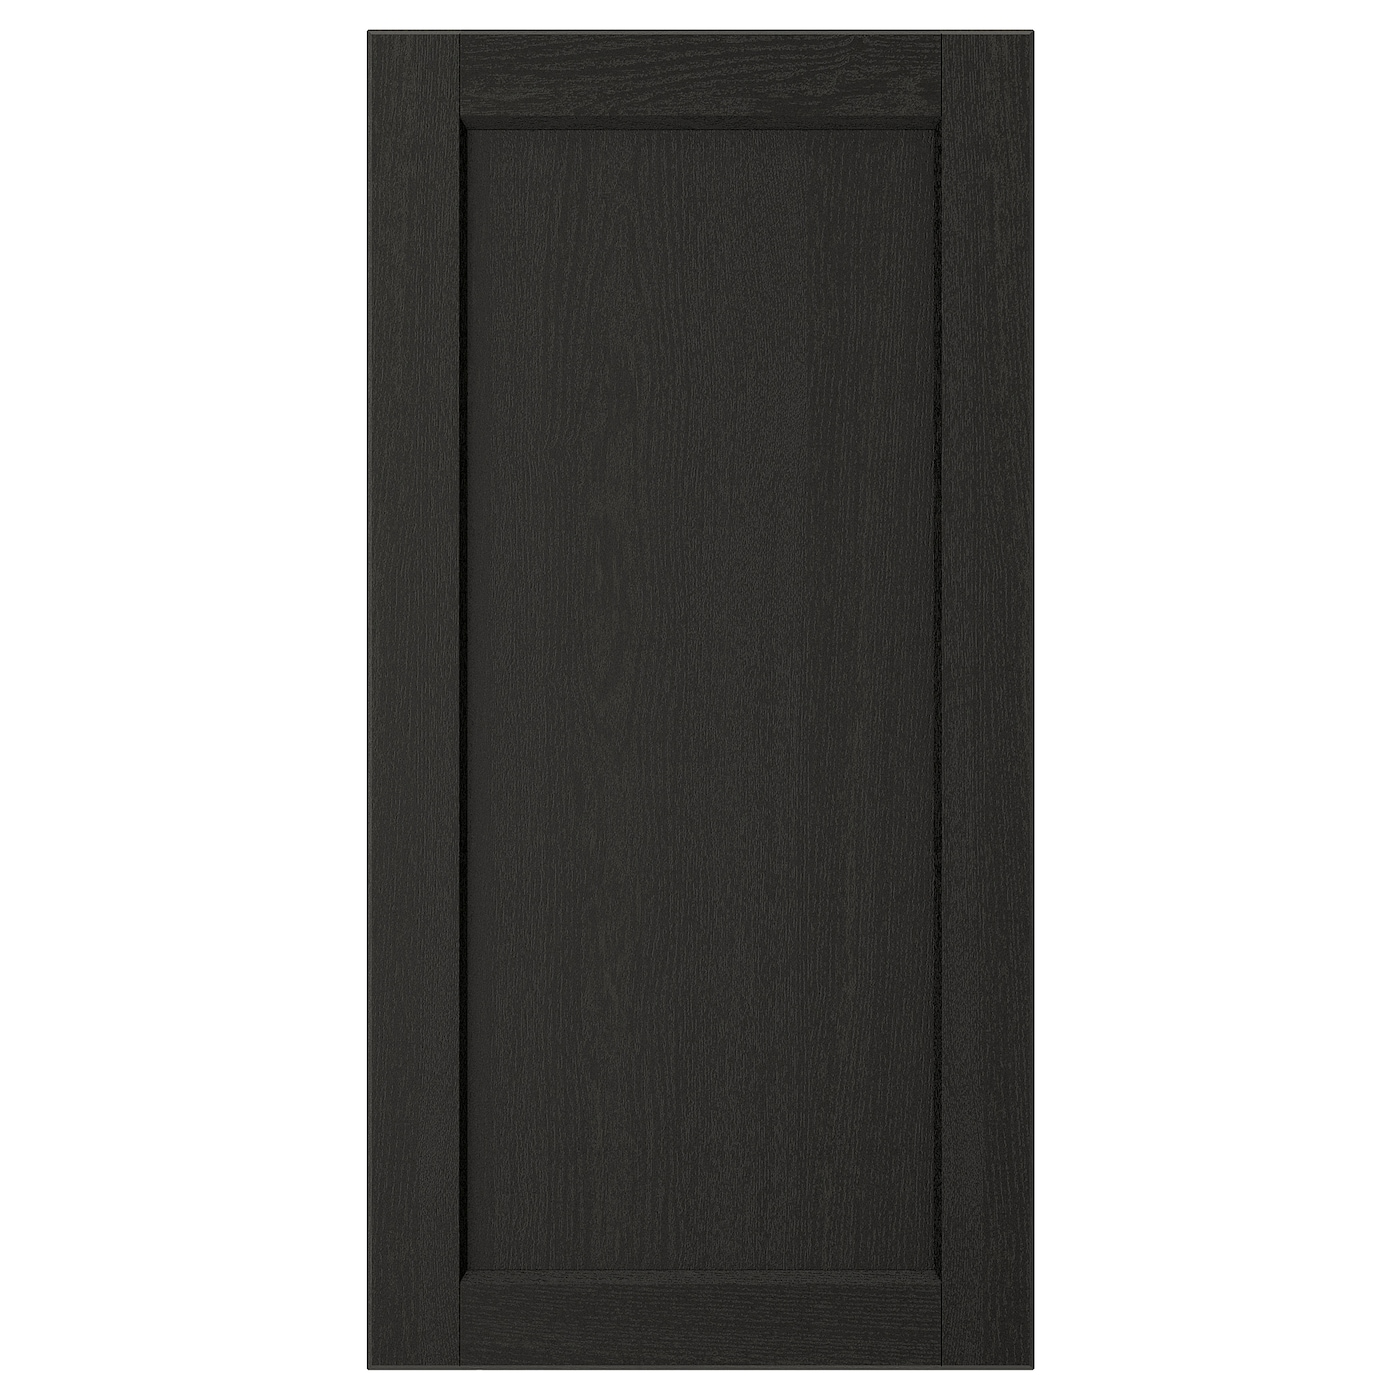 Дверца - IKEA LERHYTTAN, 80х40 см, черный, ЛЕРХЮТТАН ИКЕА